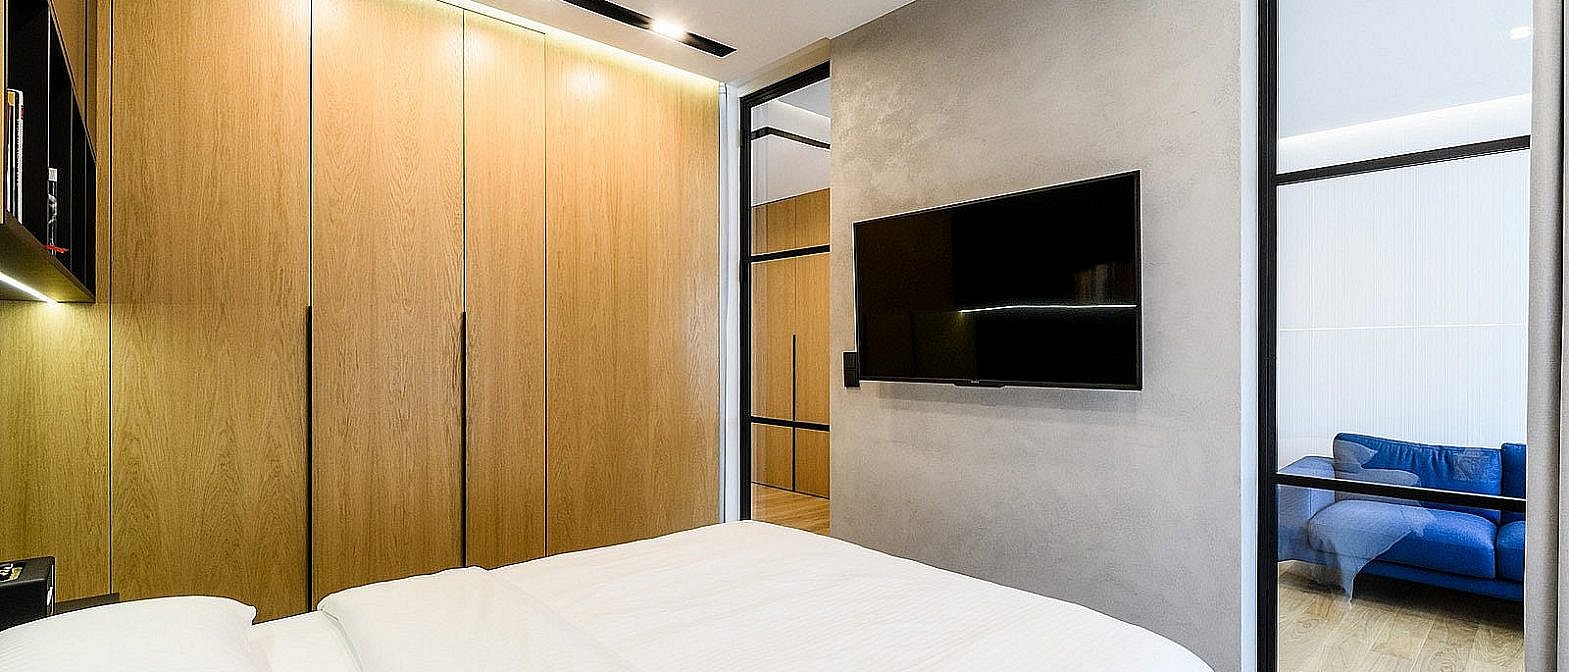 Projekt apartamentu sypialnia z elementami drewna